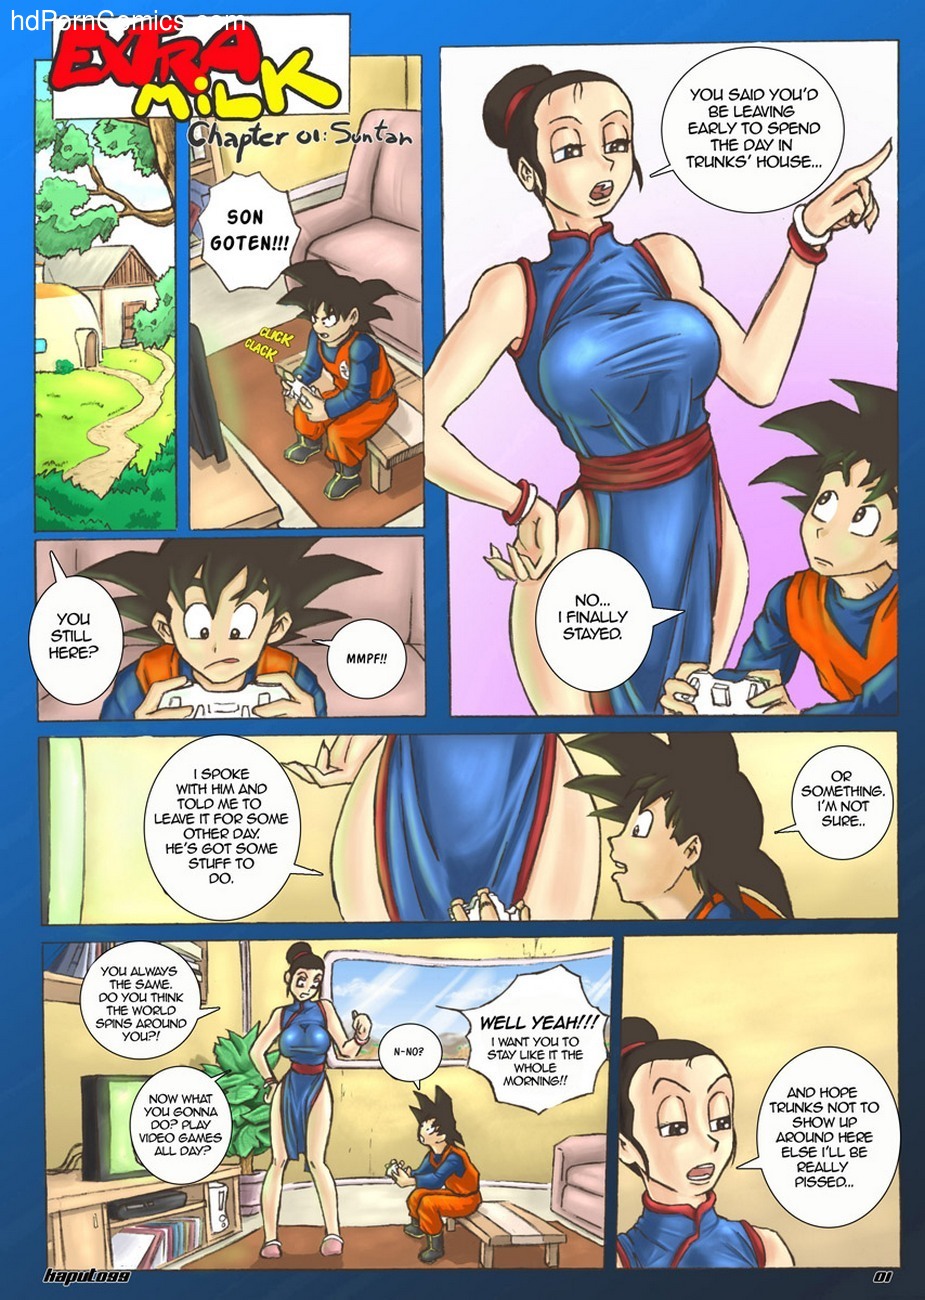 Dragon Ball Z Sex Cartoon